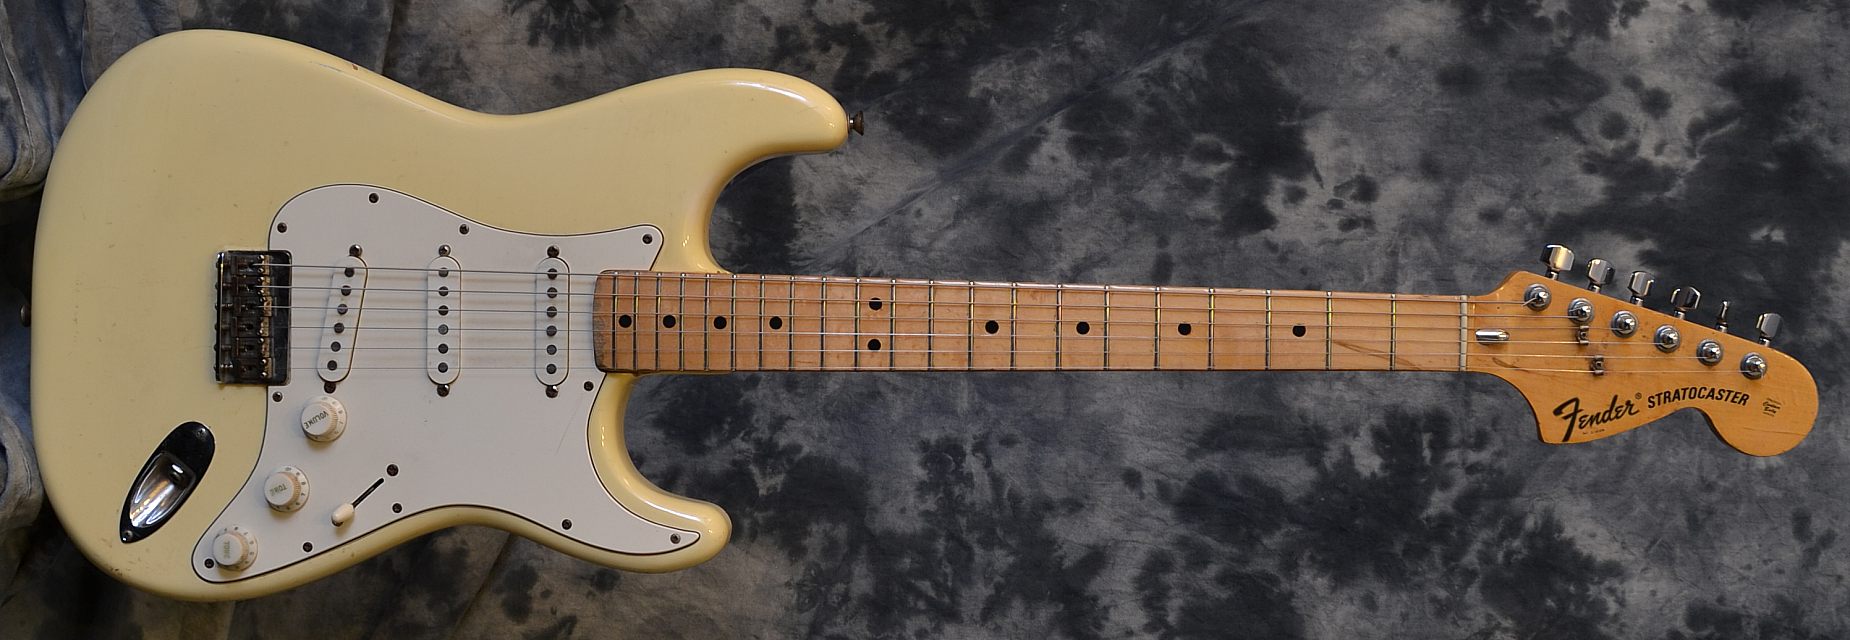 Fender Strat_Hardtail_1973(C)